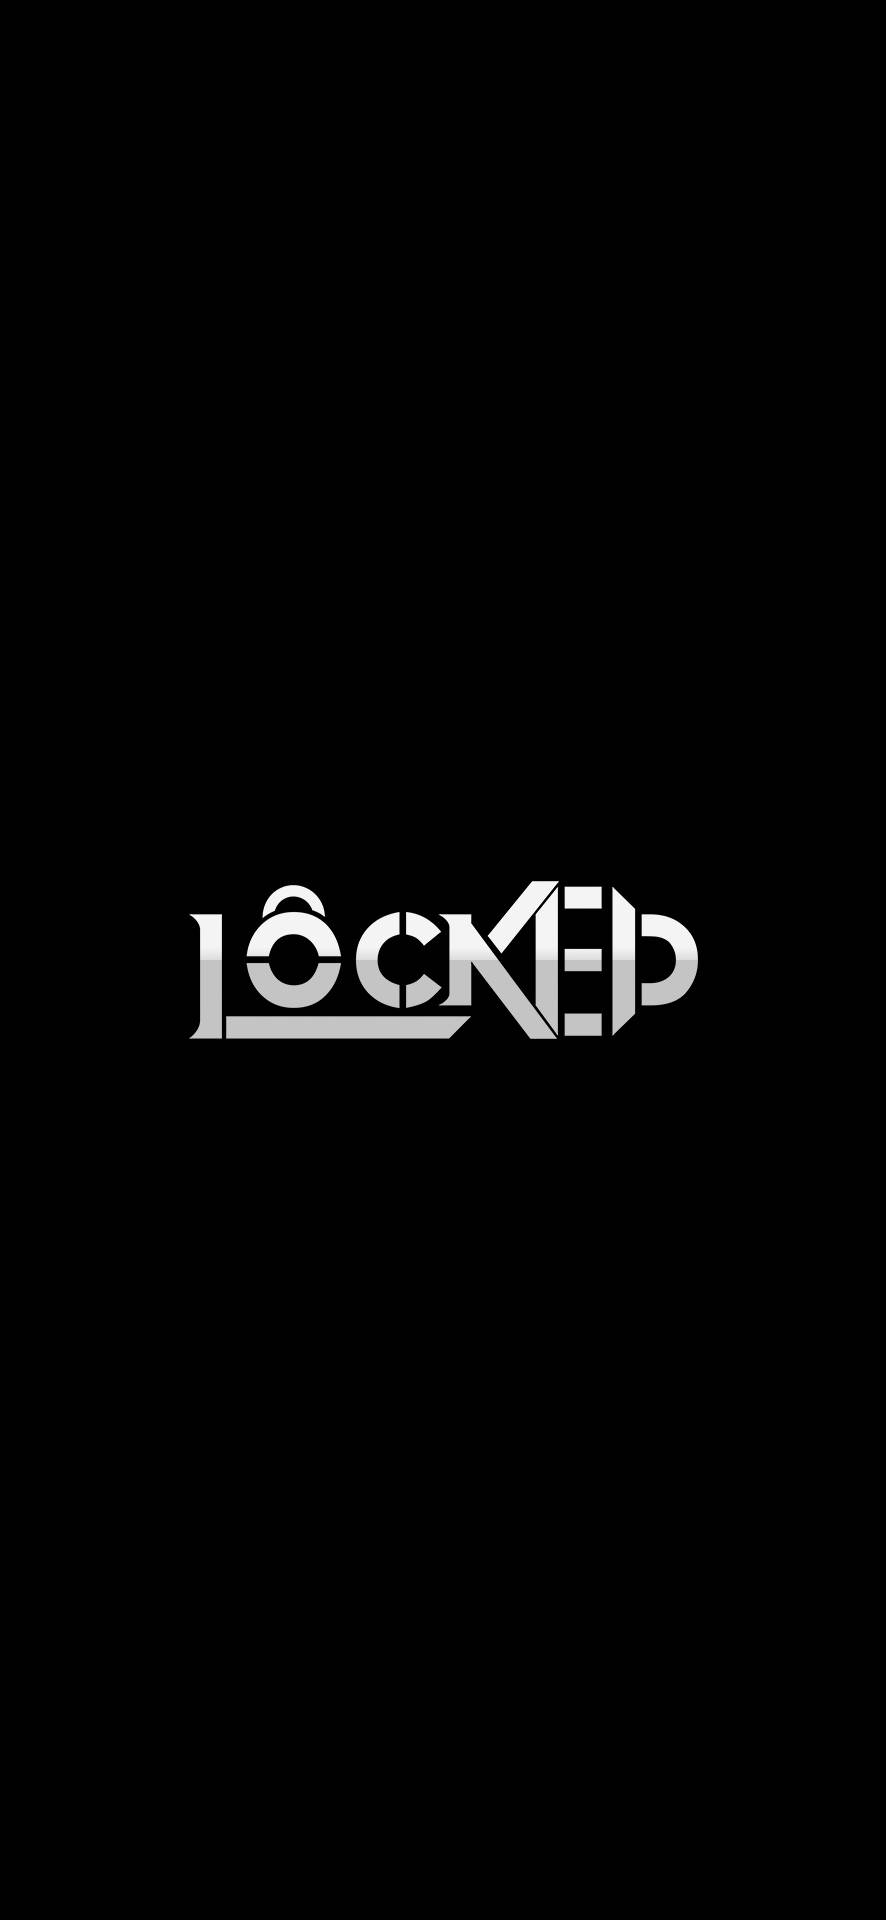 Locked - Black White Lock Screen Wallpaper